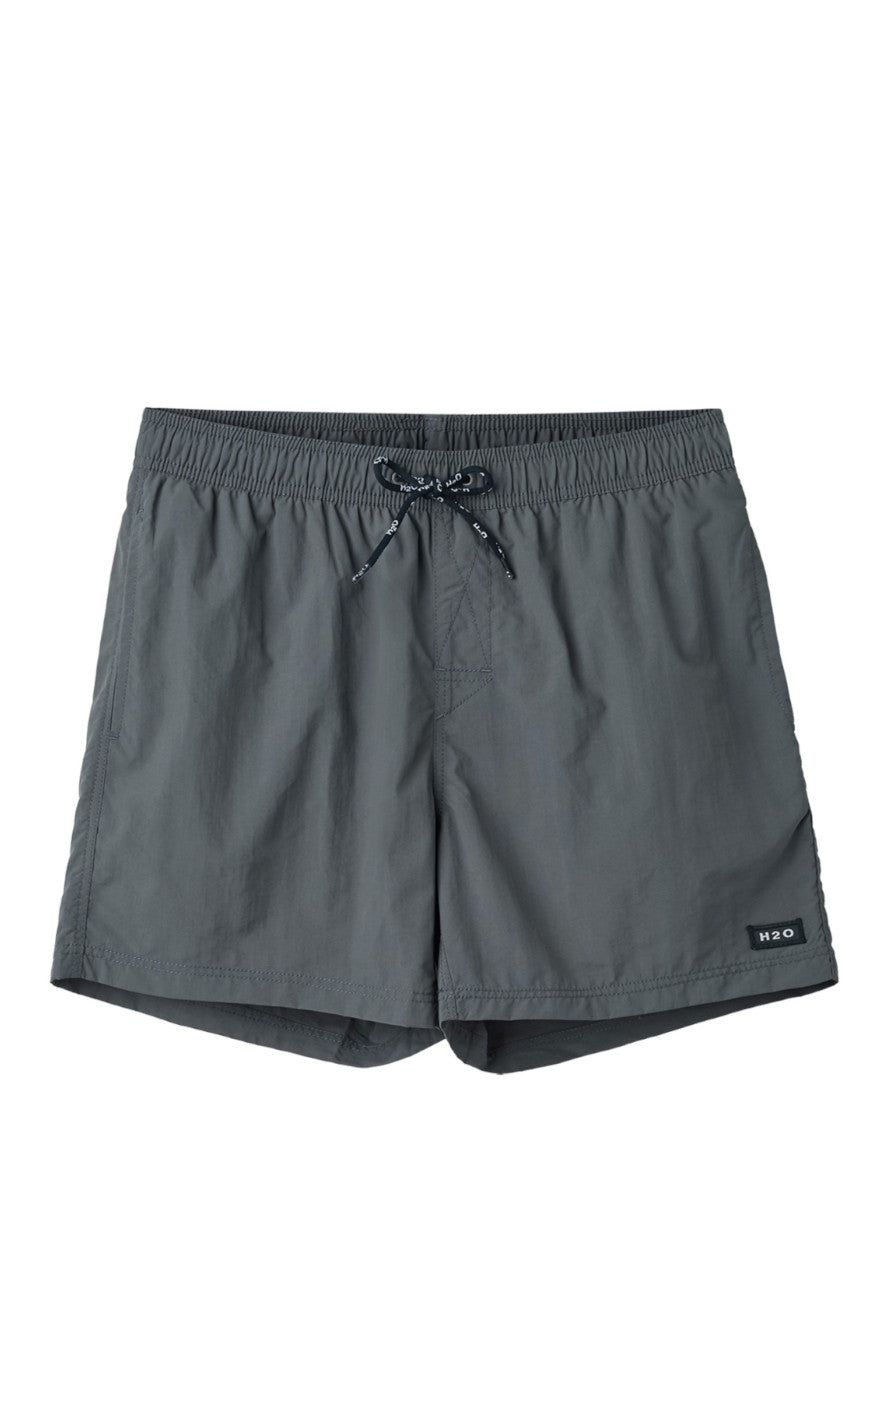 #3 - H2O Shorts - Leisure - Dark Grey